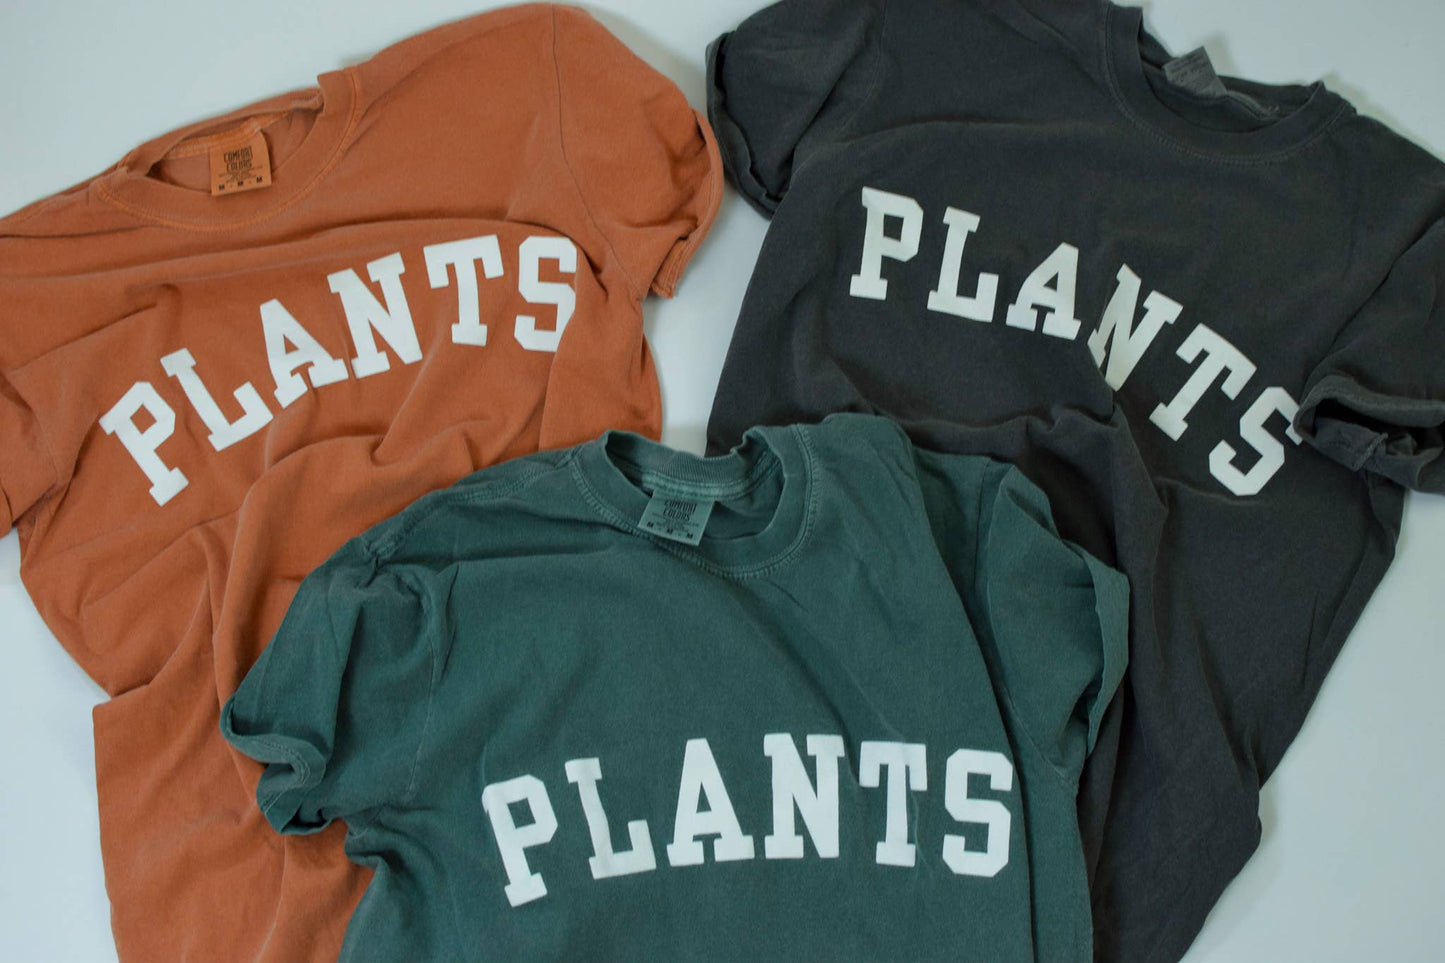 Plants T-Shirt: Terra Cotta / M